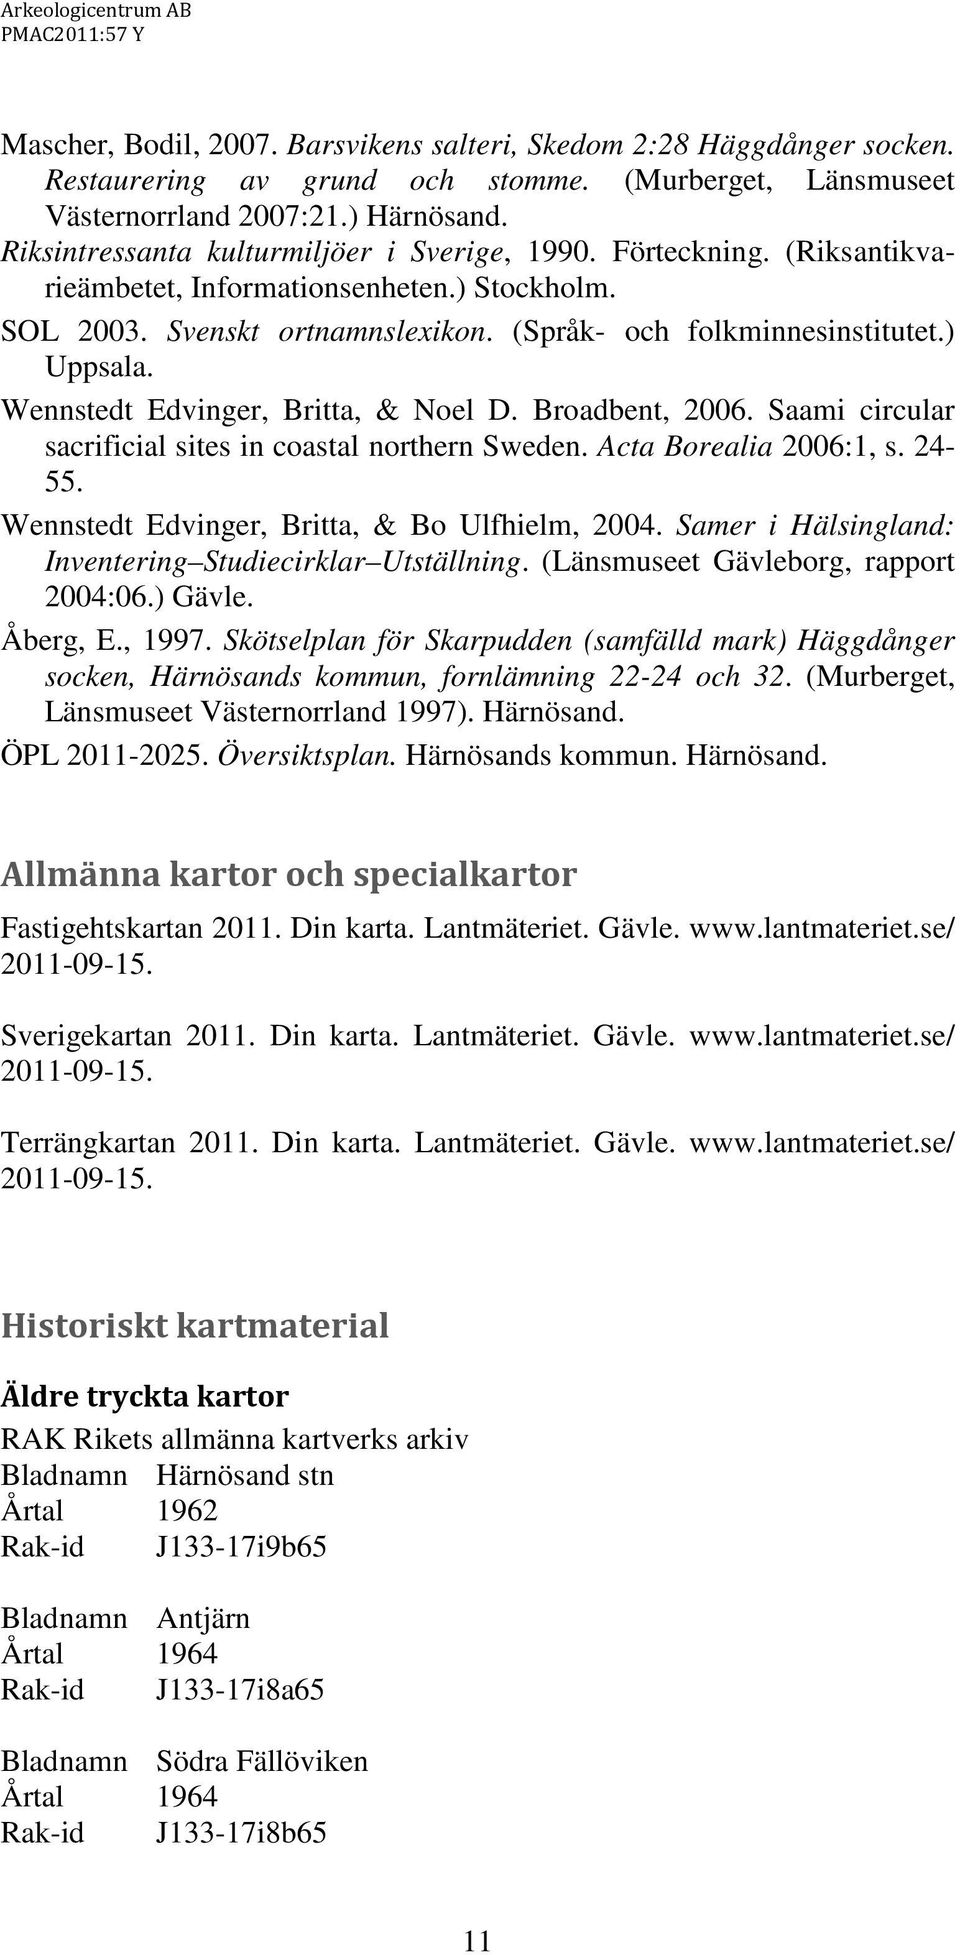 Wennstedt Edvinger, Britta, & Noel D. Broadbent, 2006. Saami circular sacrificial sites in coastal northern Sweden. Acta Borealia 2006:1, s. 24-55. Wennstedt Edvinger, Britta, & Bo Ulfhielm, 2004.